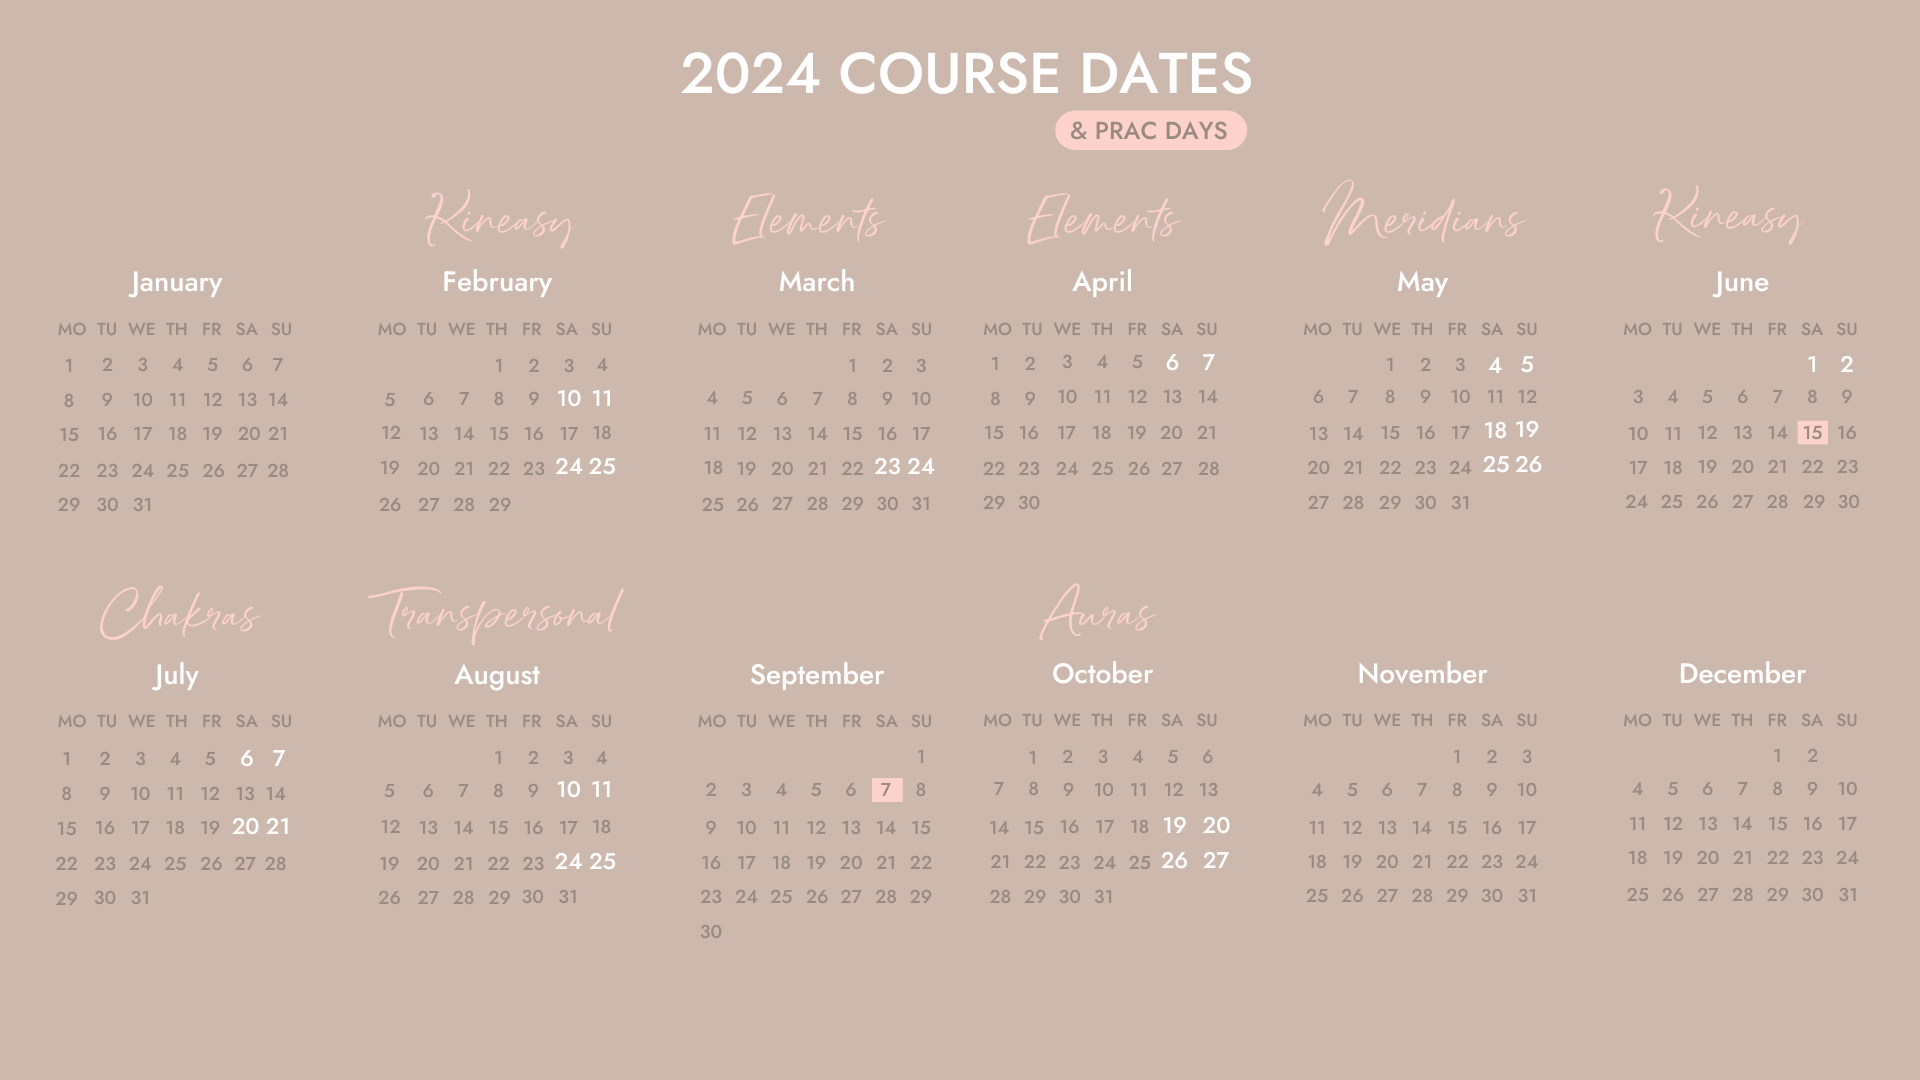 CALENDAR OF COURSE DATES FOR 2024